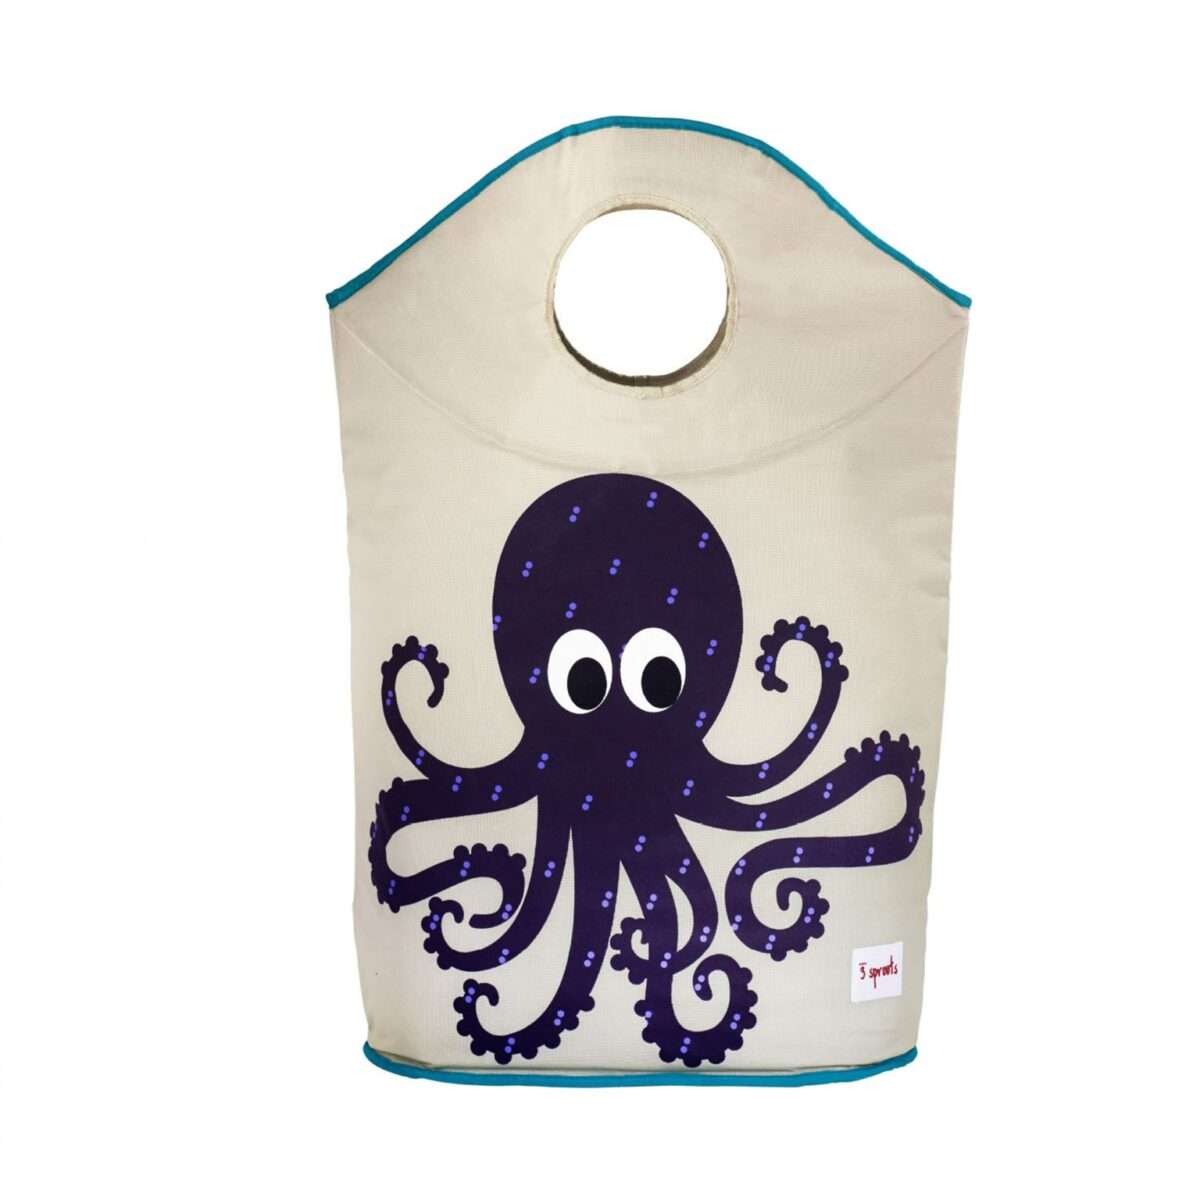 LHOCT 3Sprouts Laundry Hamper Octopus 2 1536x1536 1